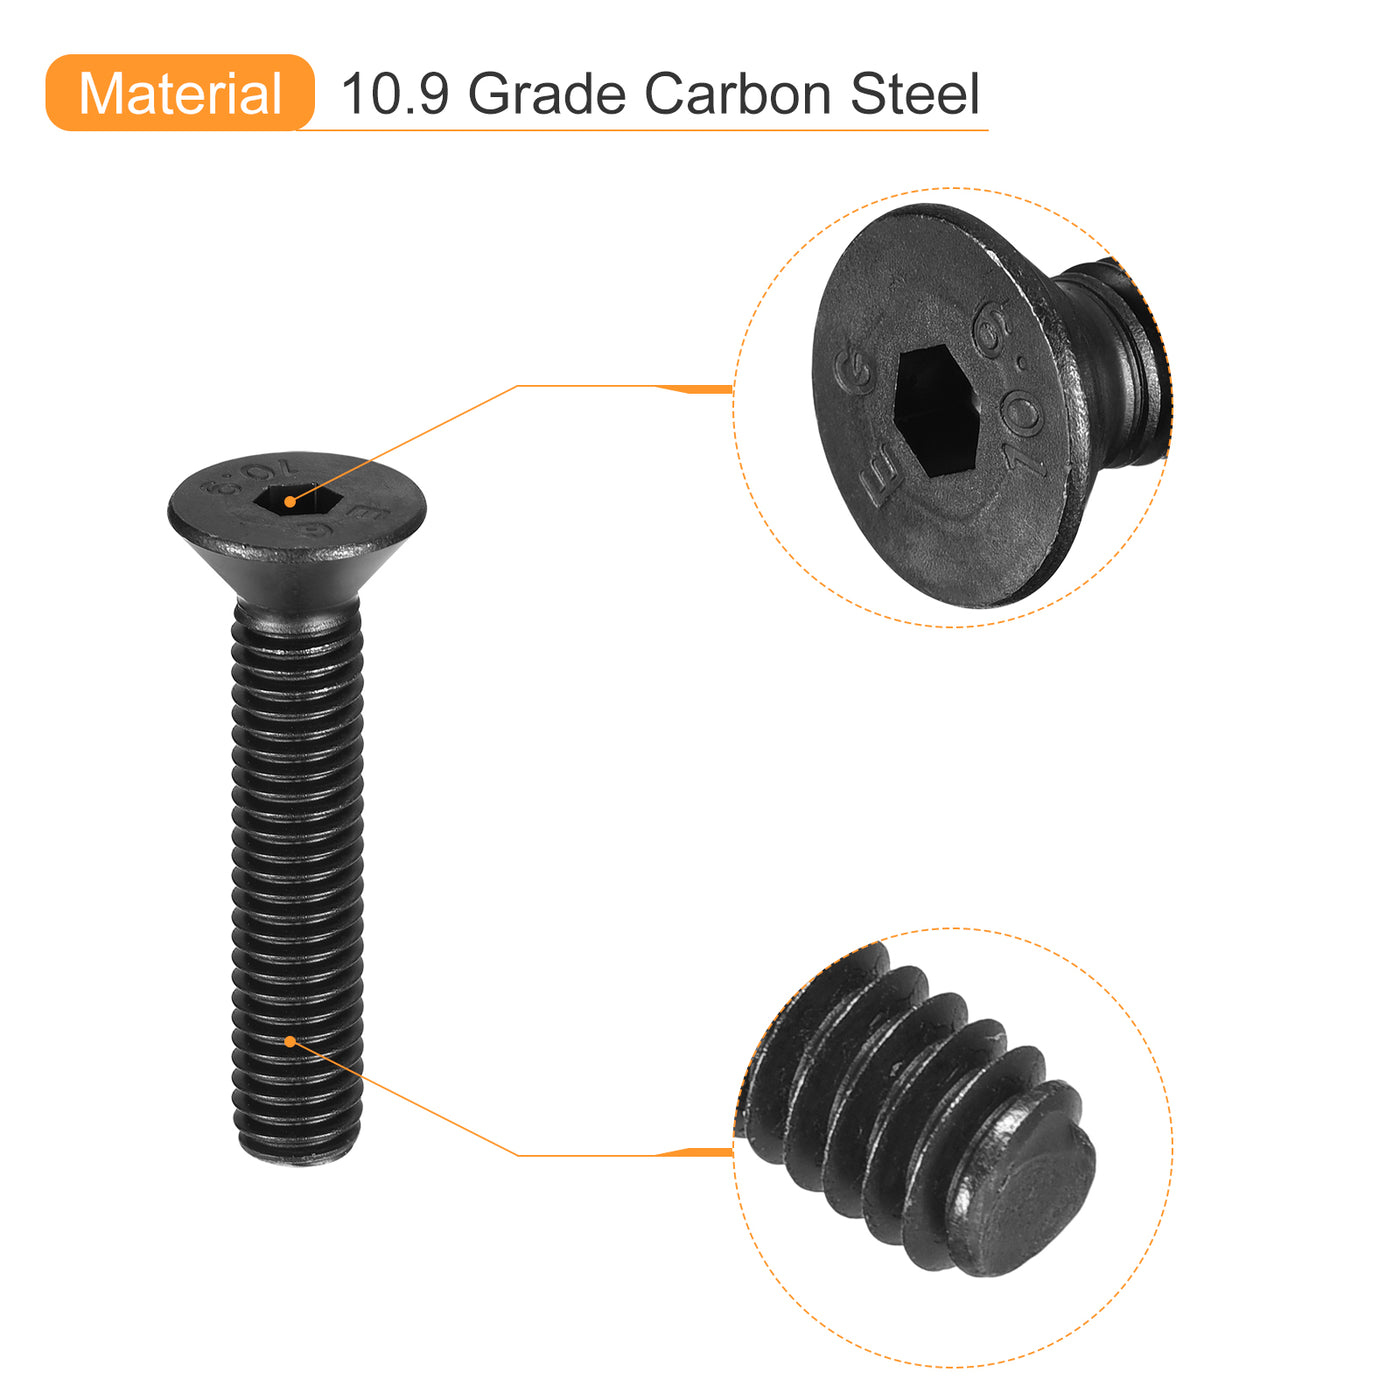 uxcell Uxcell 3/8-16x2" Flat Head Socket Cap Screws, 10.9 Grade Carbon Steel, 20PCS